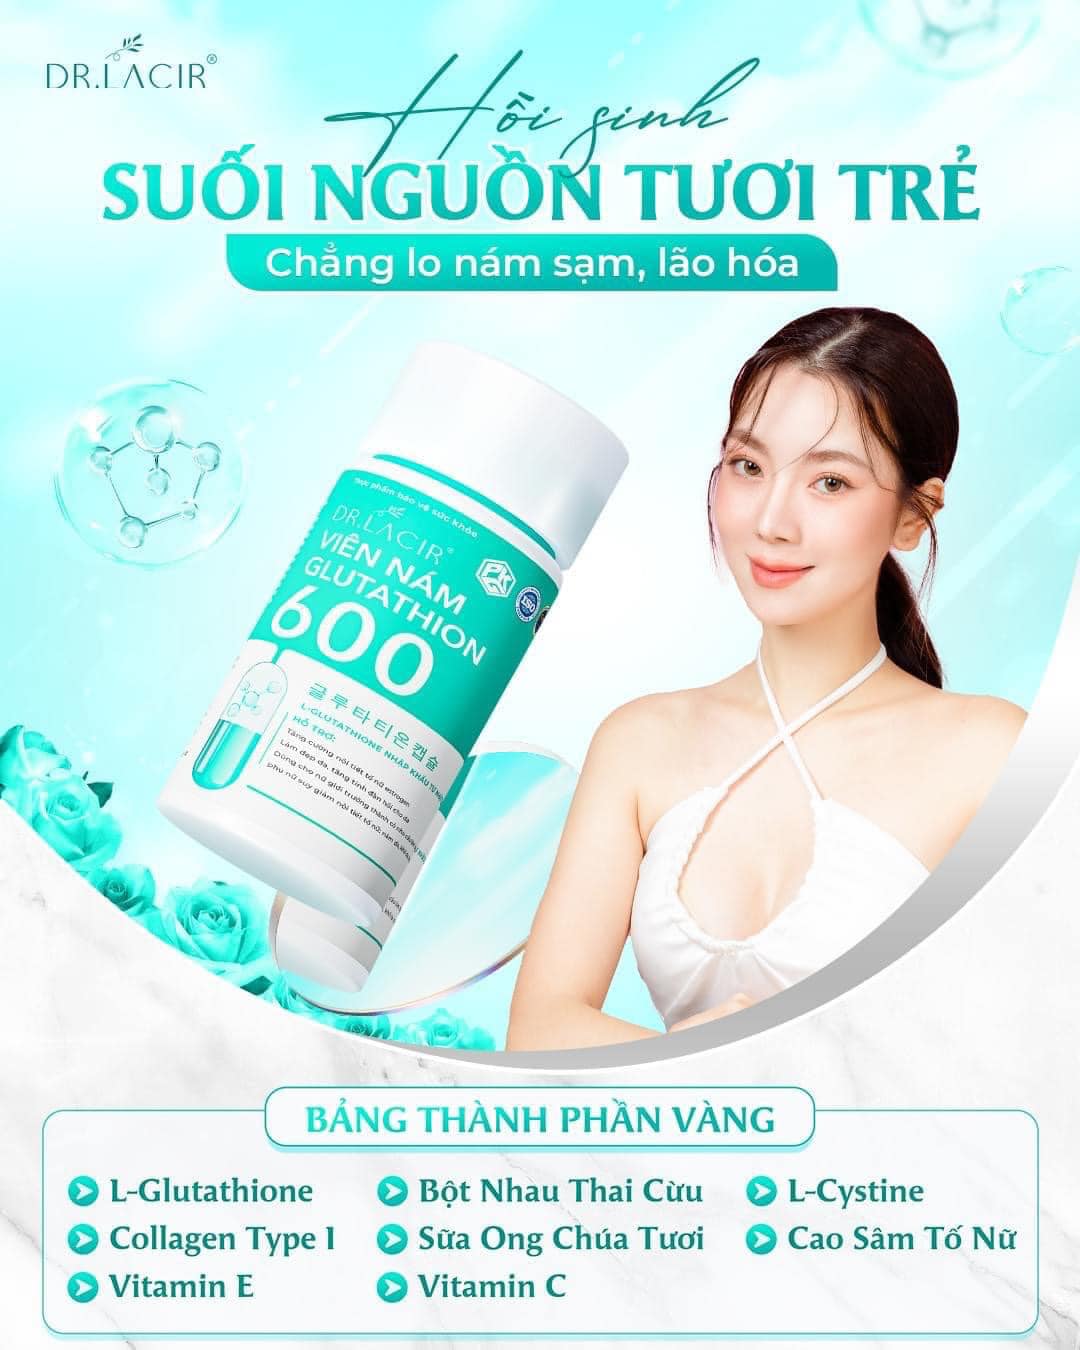 lieu-trinh-3-thang-vien-uong-glutathione-600-dr-lacir-trang-da-het-nam-cai-thien-noi-tiet-to